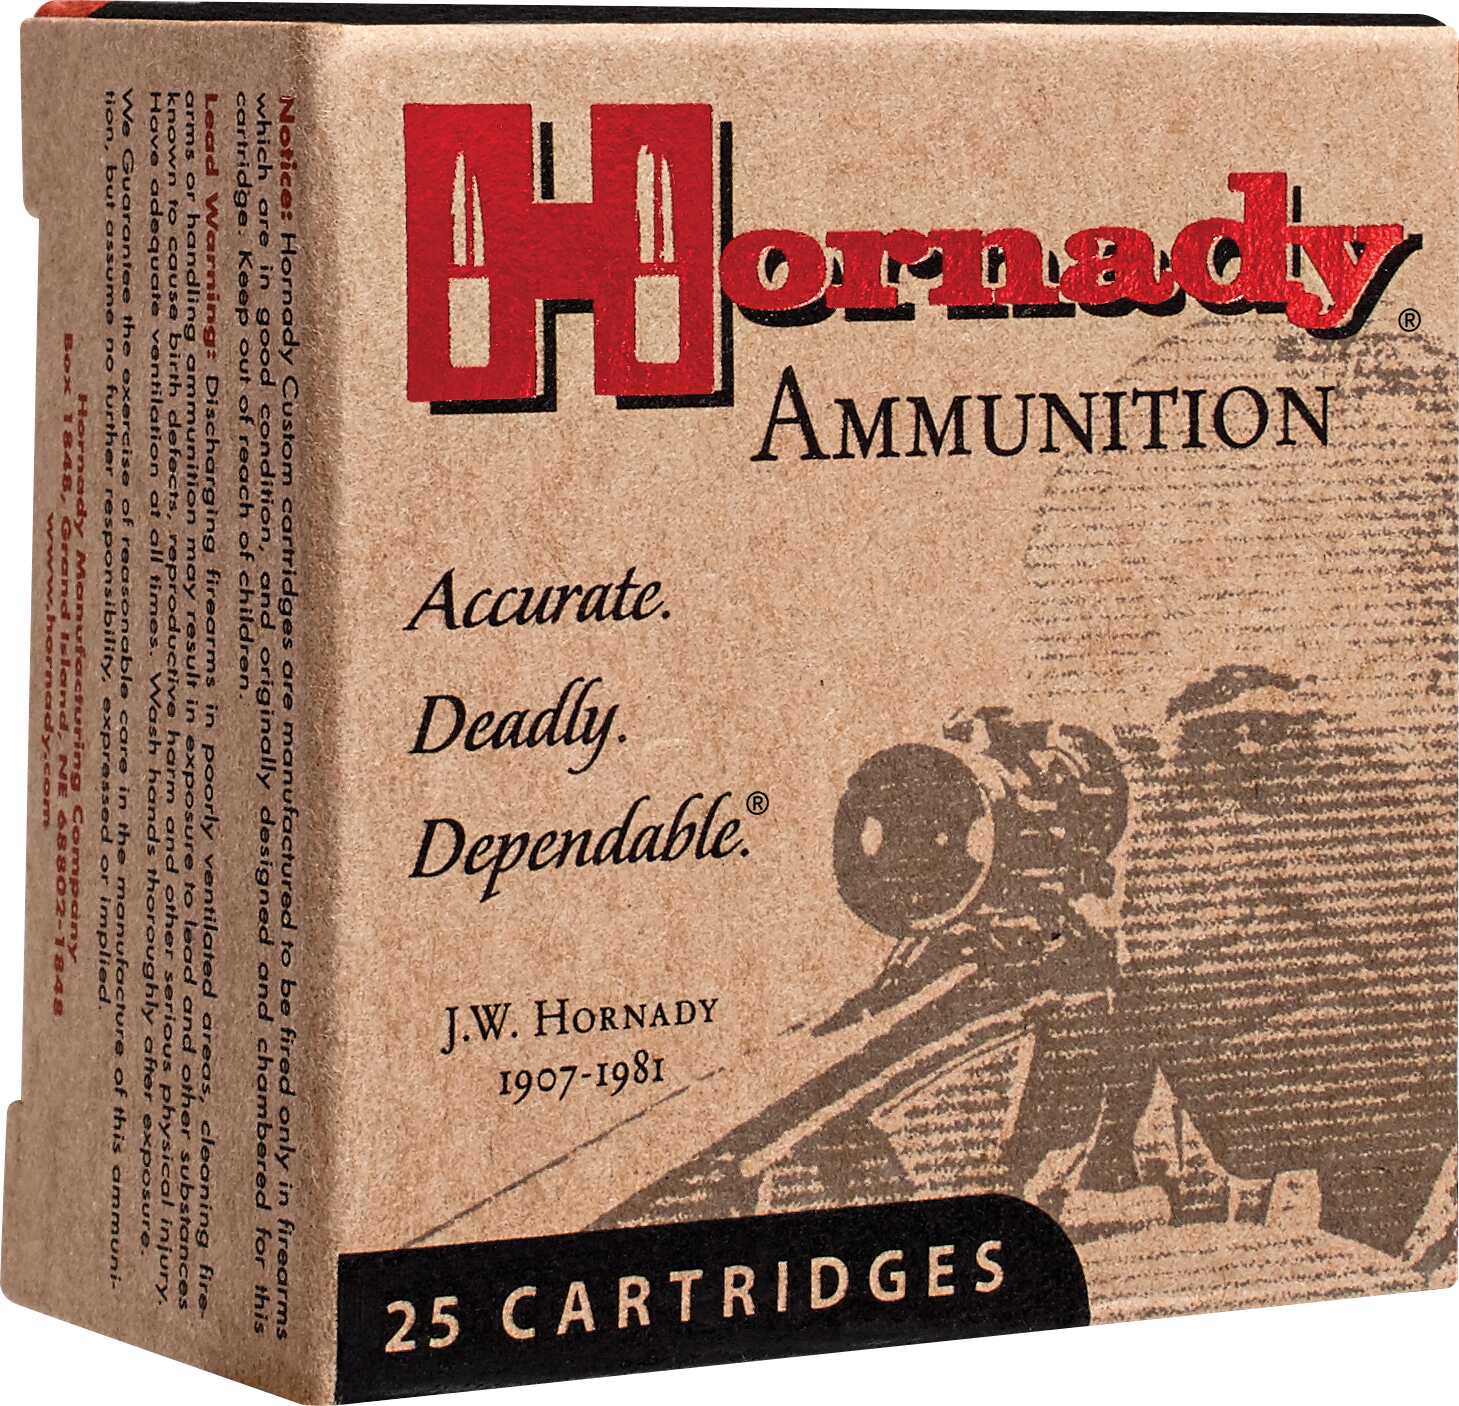 460 S&W Mag 200 Grain Ballistic Tip Rounds Hornady Ammunition Magnum